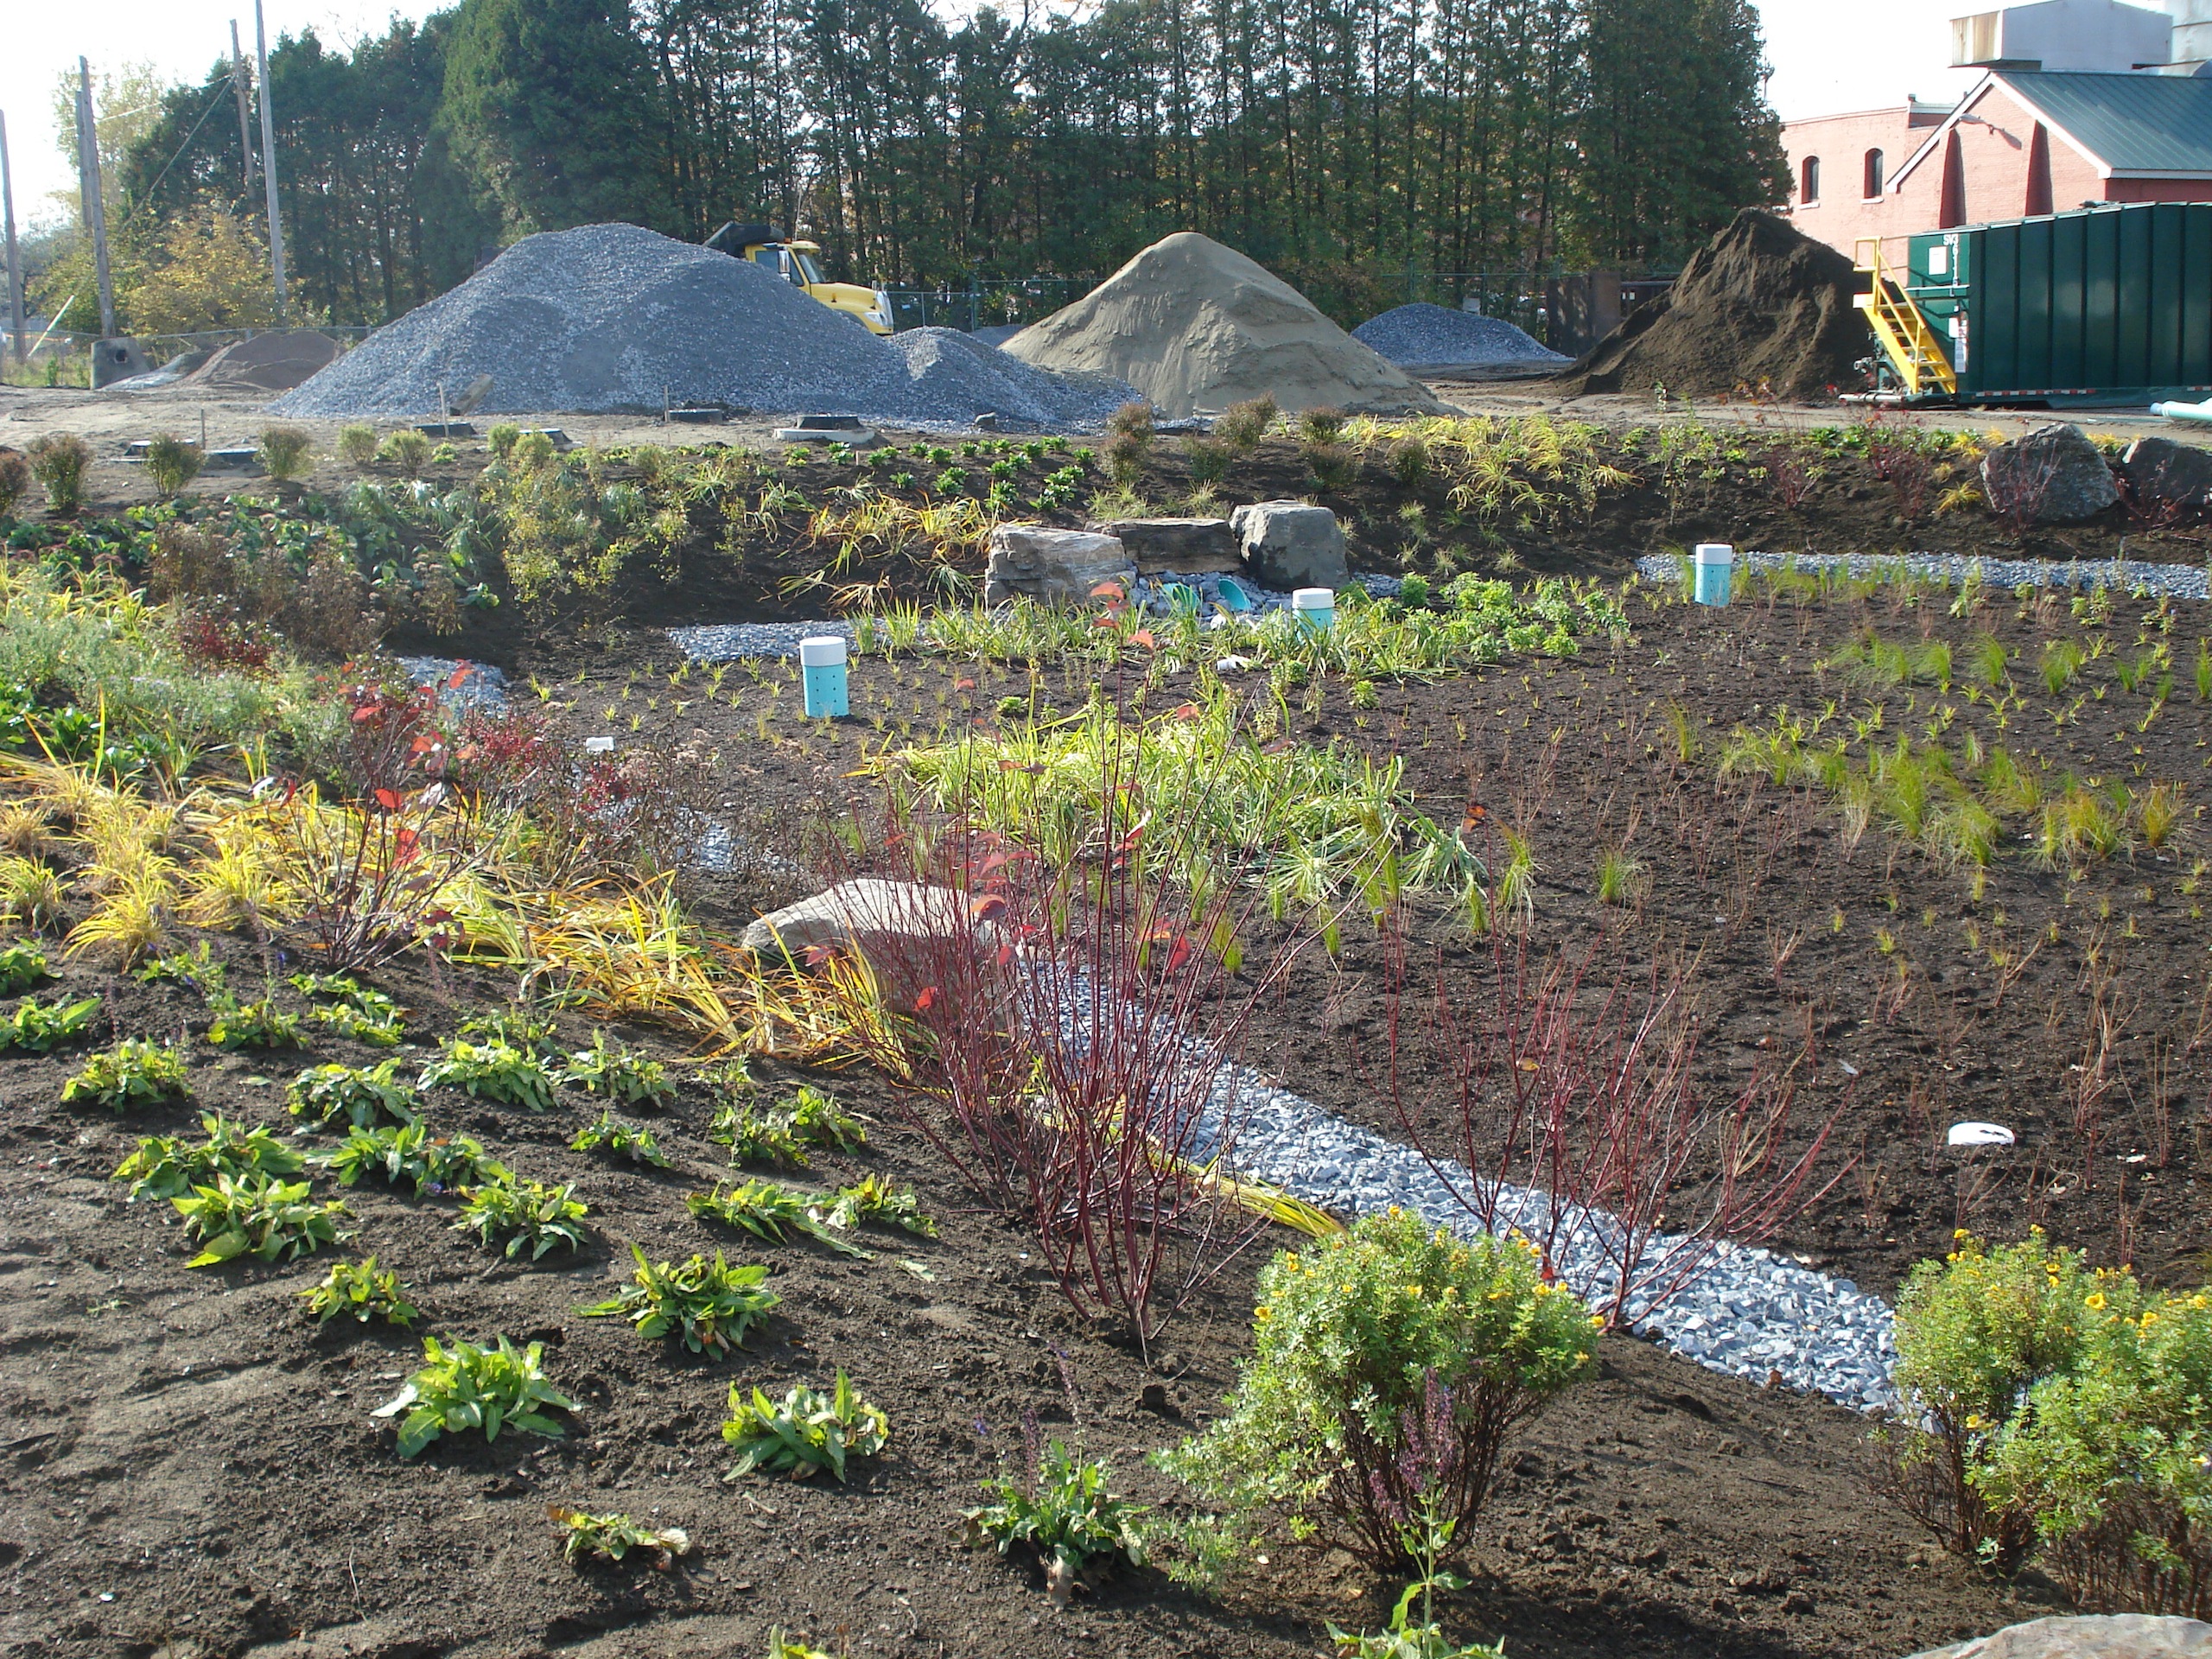 Installed rain garden as part of stormwater management in Burlington, Vermont